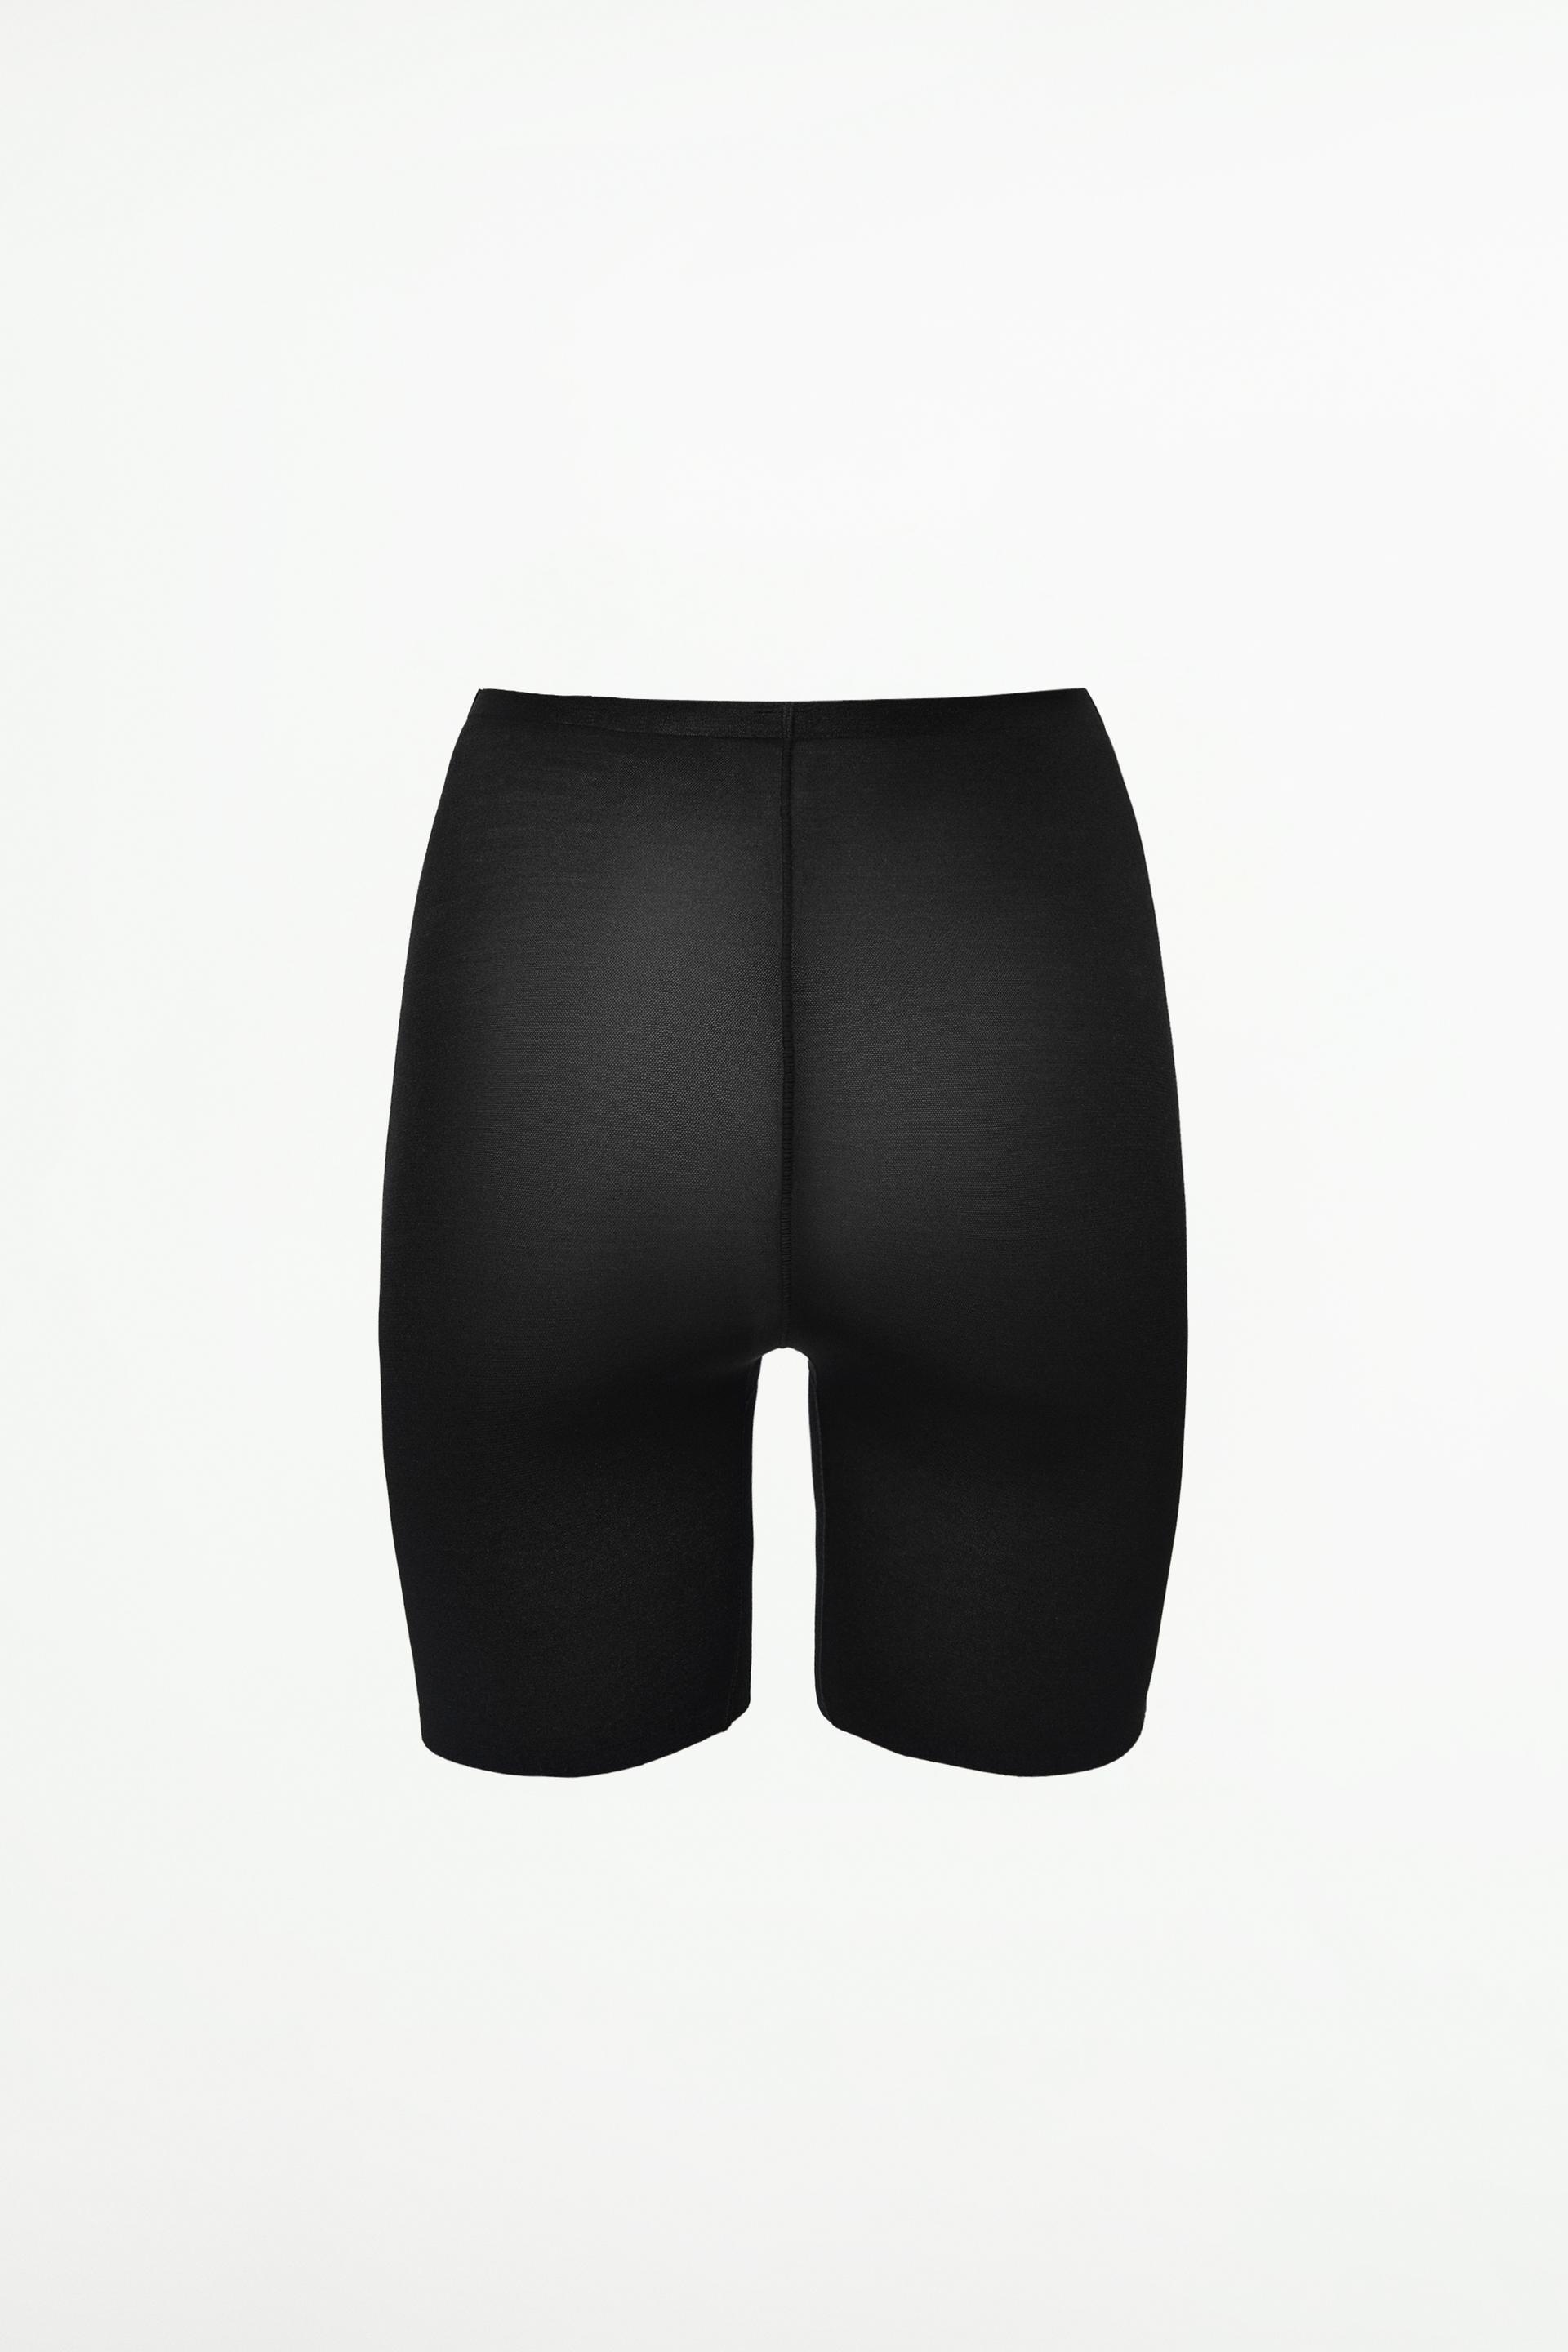 Tek gear shapewear medium womens shorts black biker shorts 6 inch